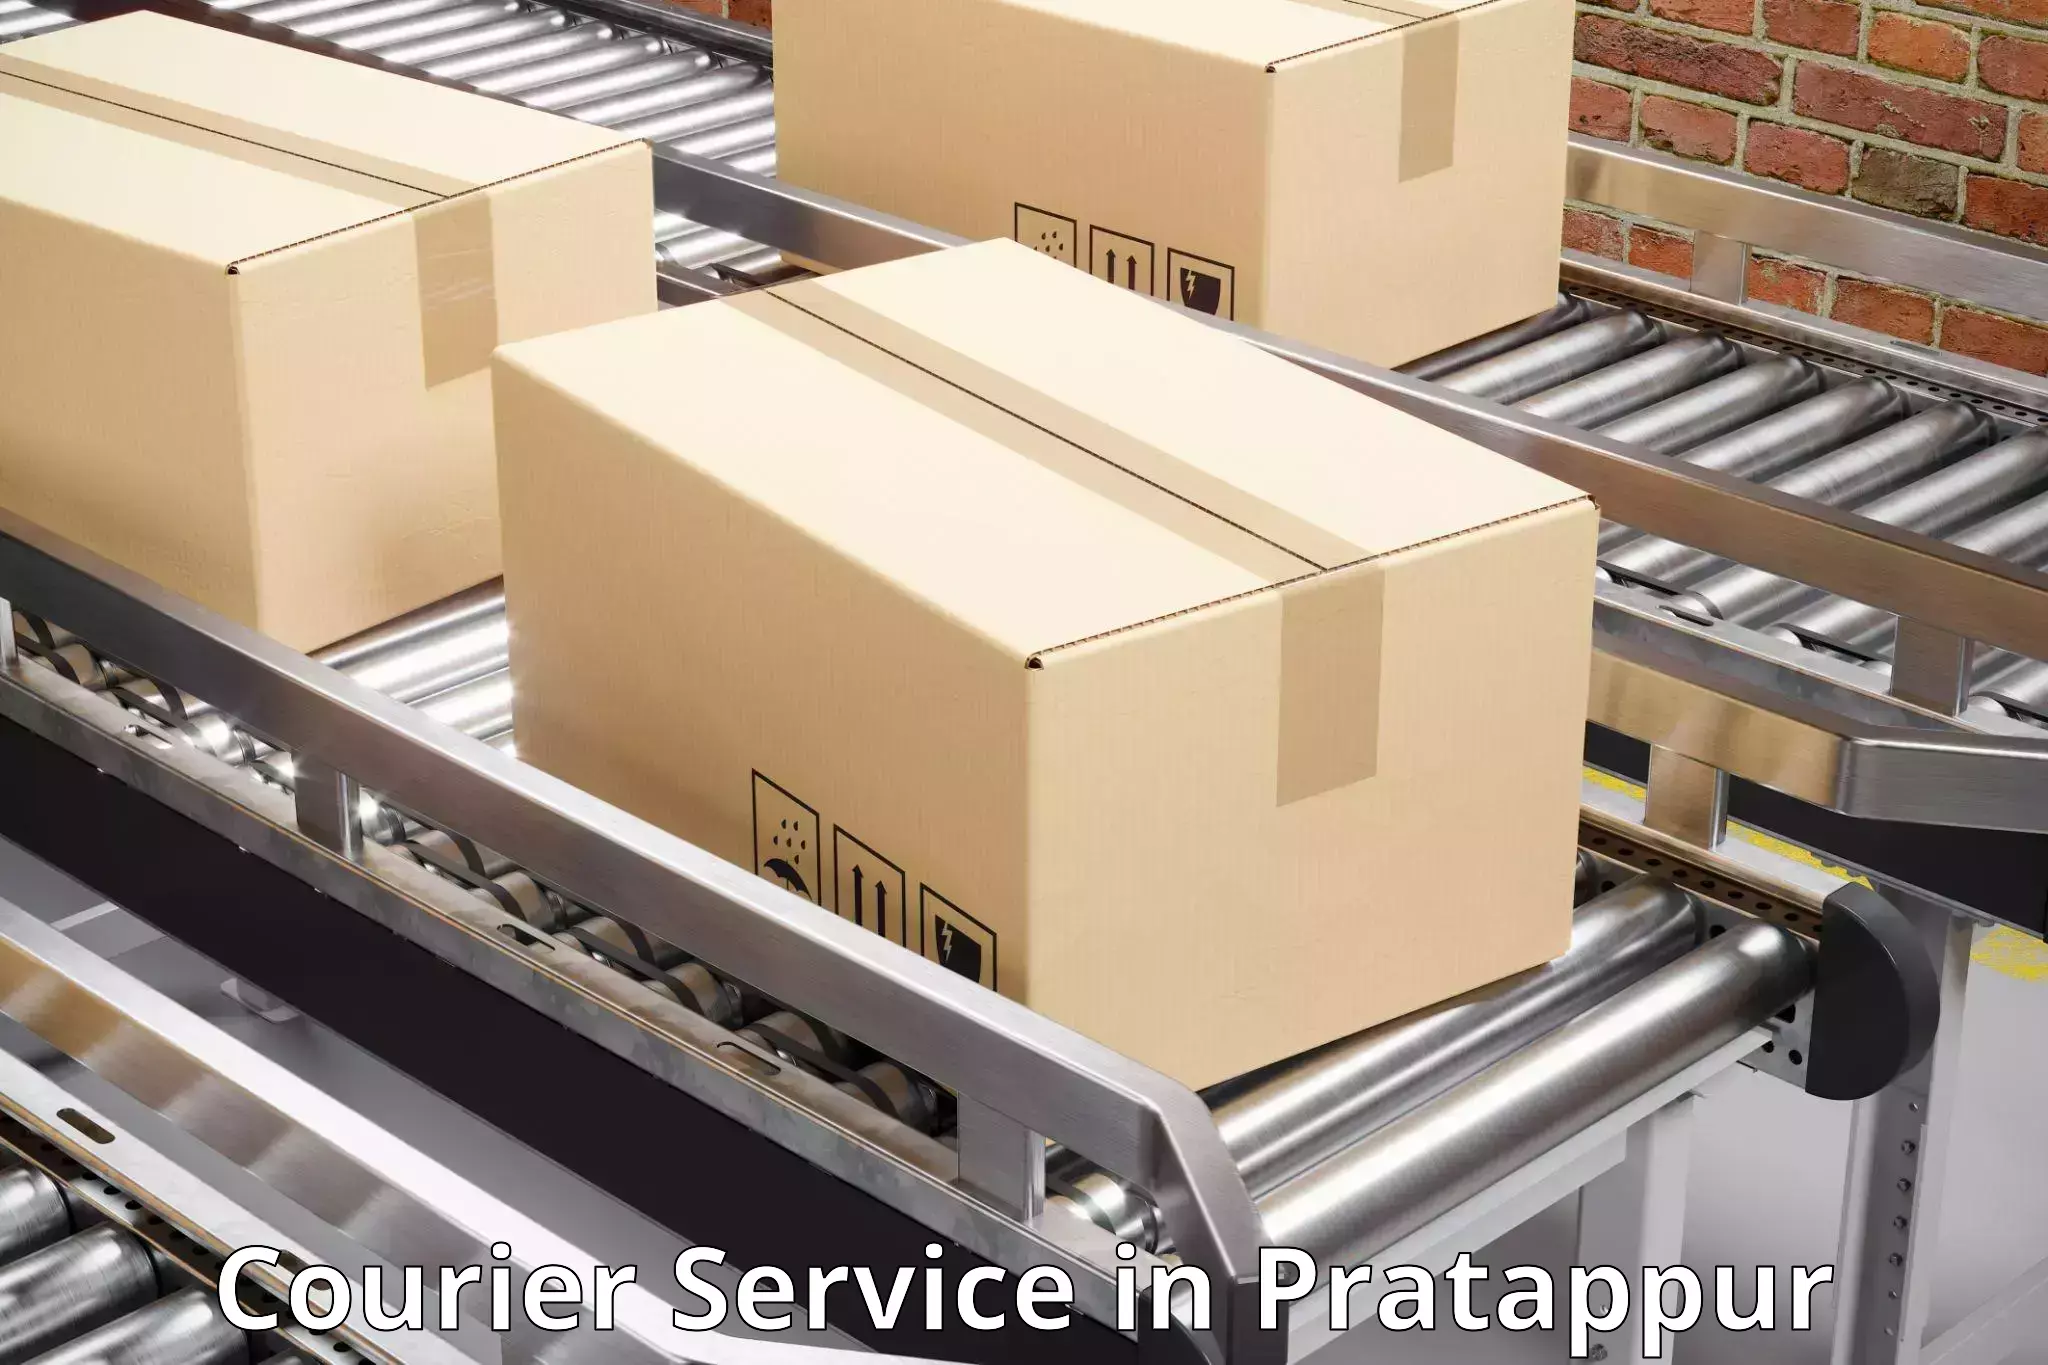 Doorstep delivery service in Pratappur